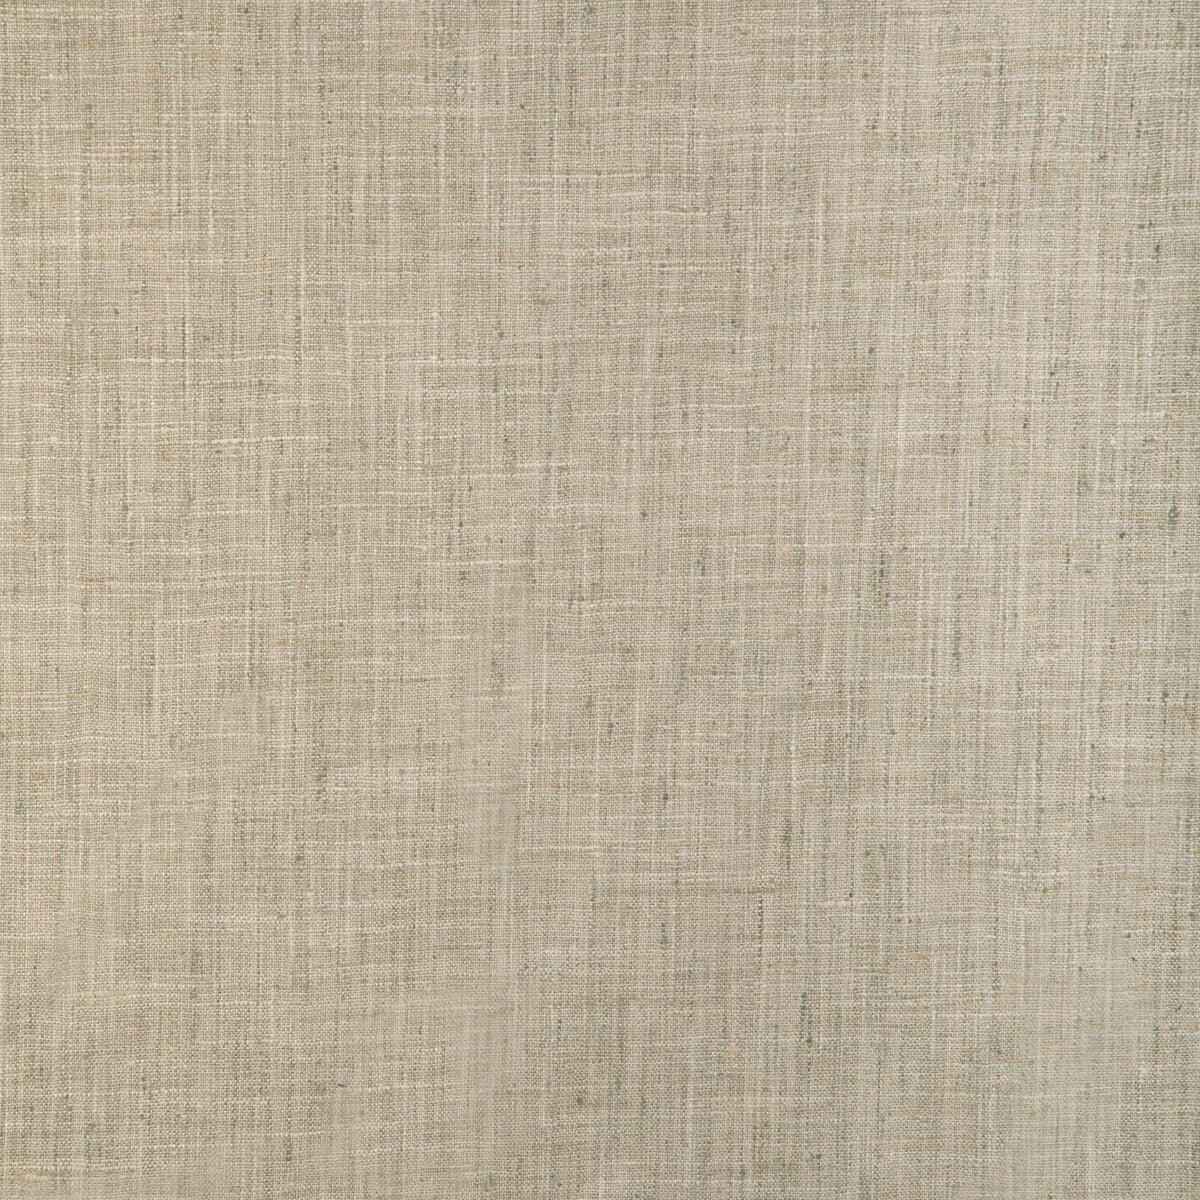 Kravet Smart fabric in 34983-11 color - pattern 34983.11.0 - by Kravet Smart